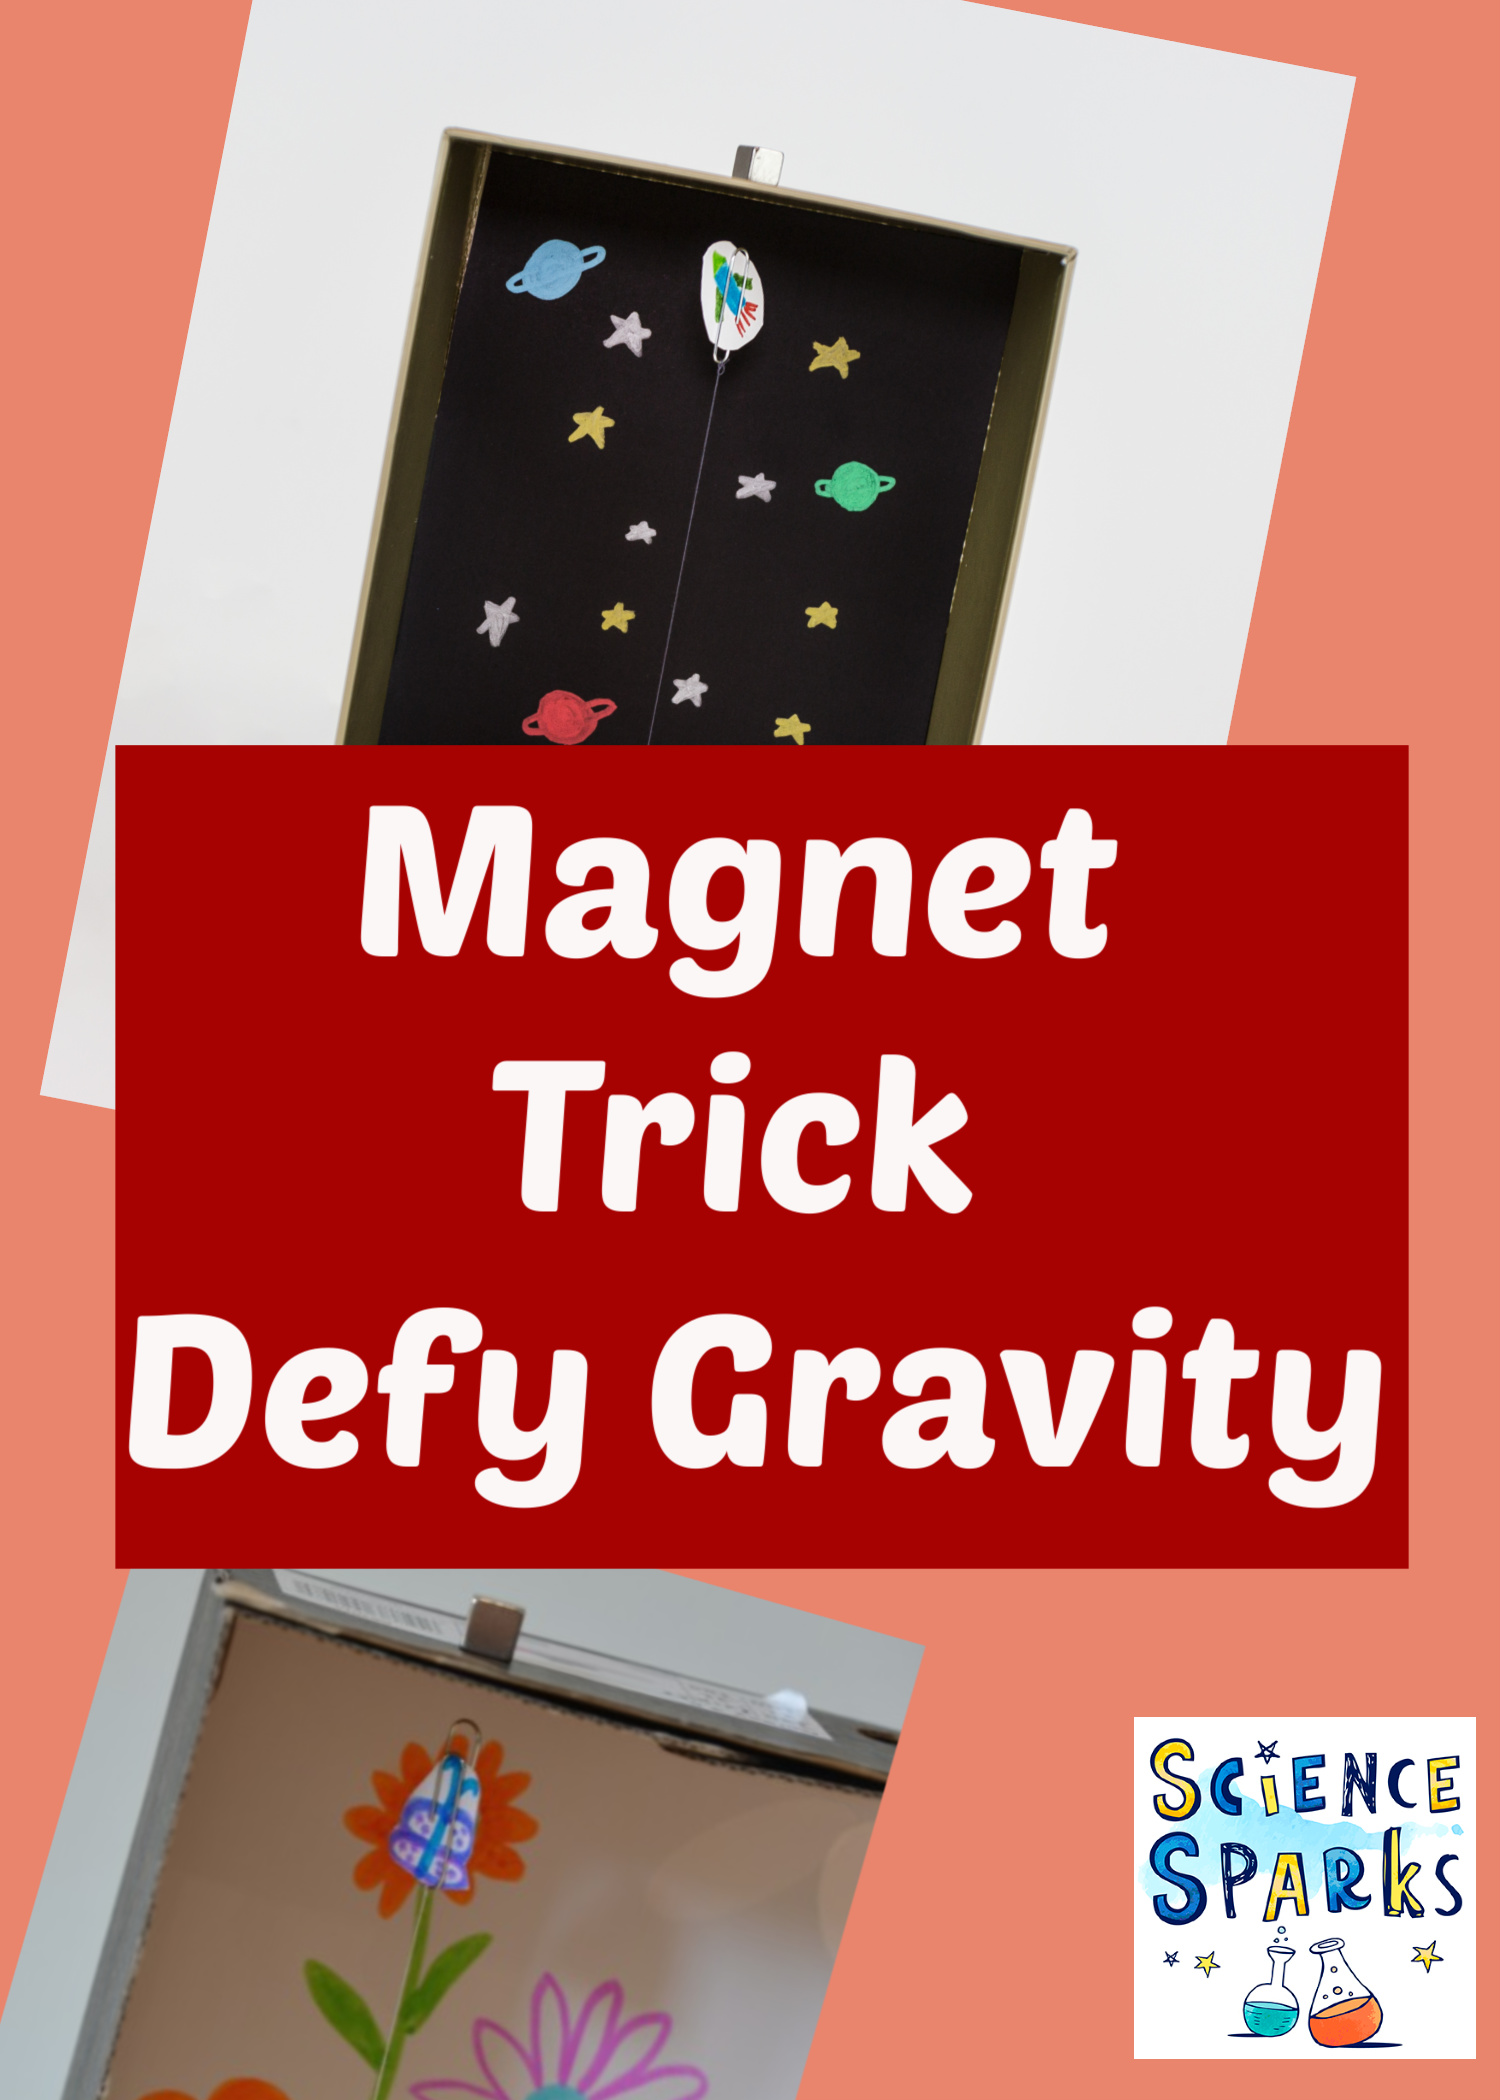 Gravity Magnetism - How Defy Gravity - Trick